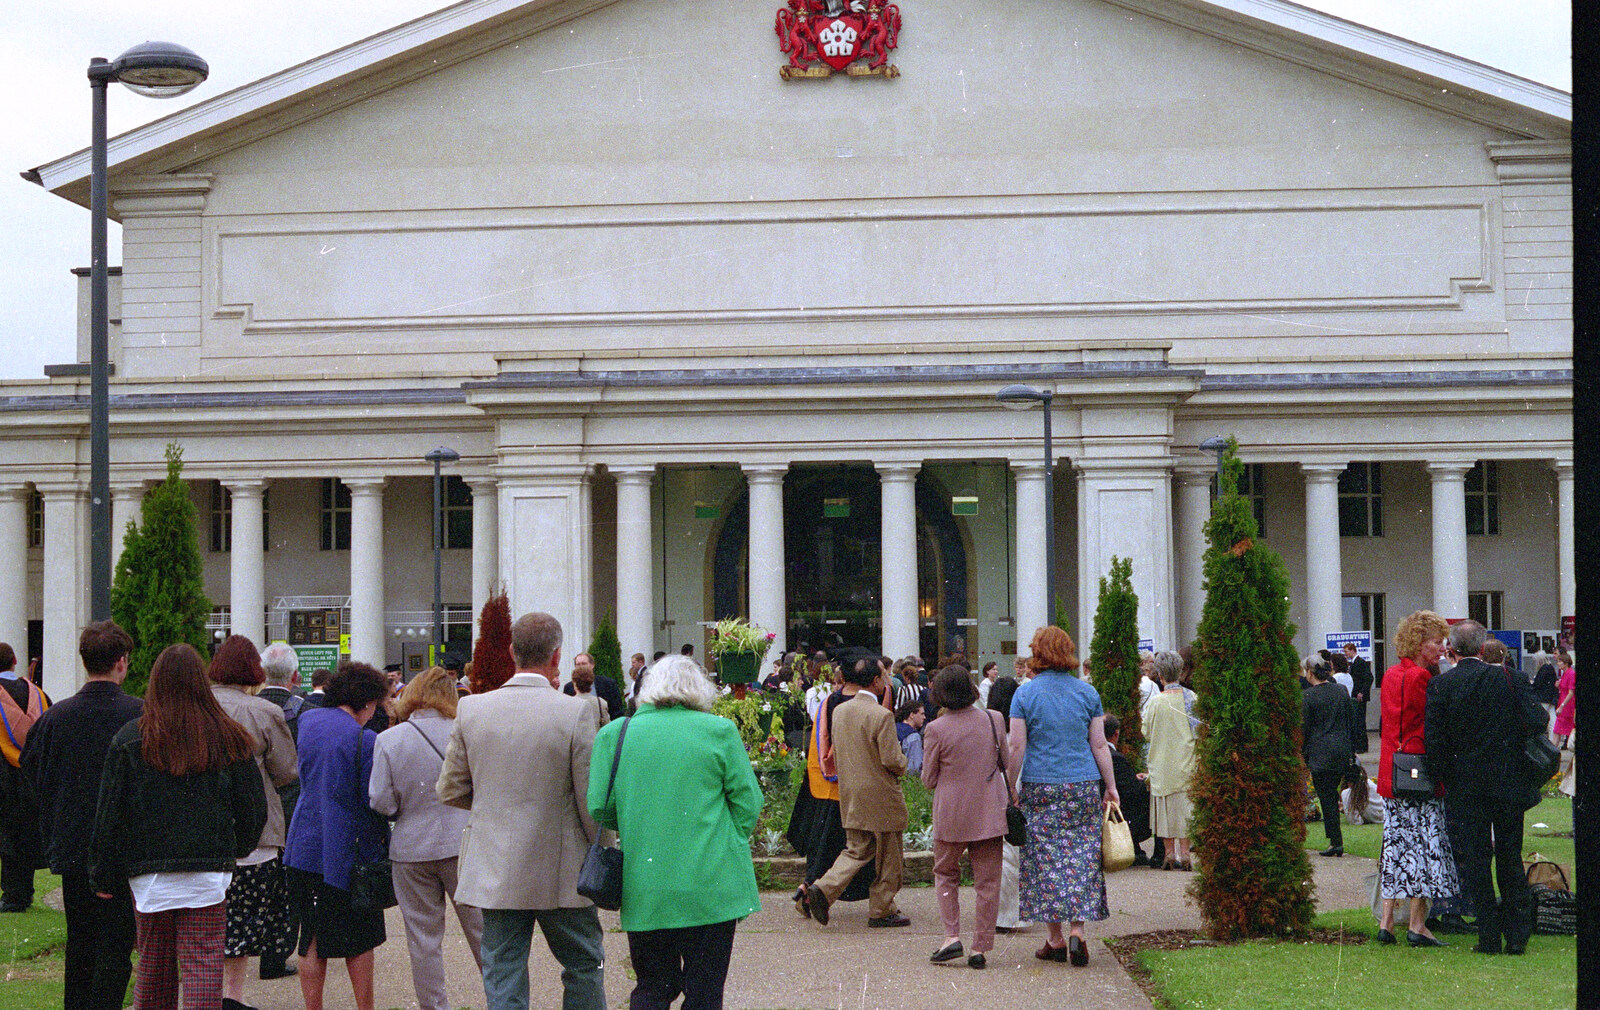 Sis Graduates from De Montfort, Leicester, Leicestershire - 9th August 1997: De Montfort Hall